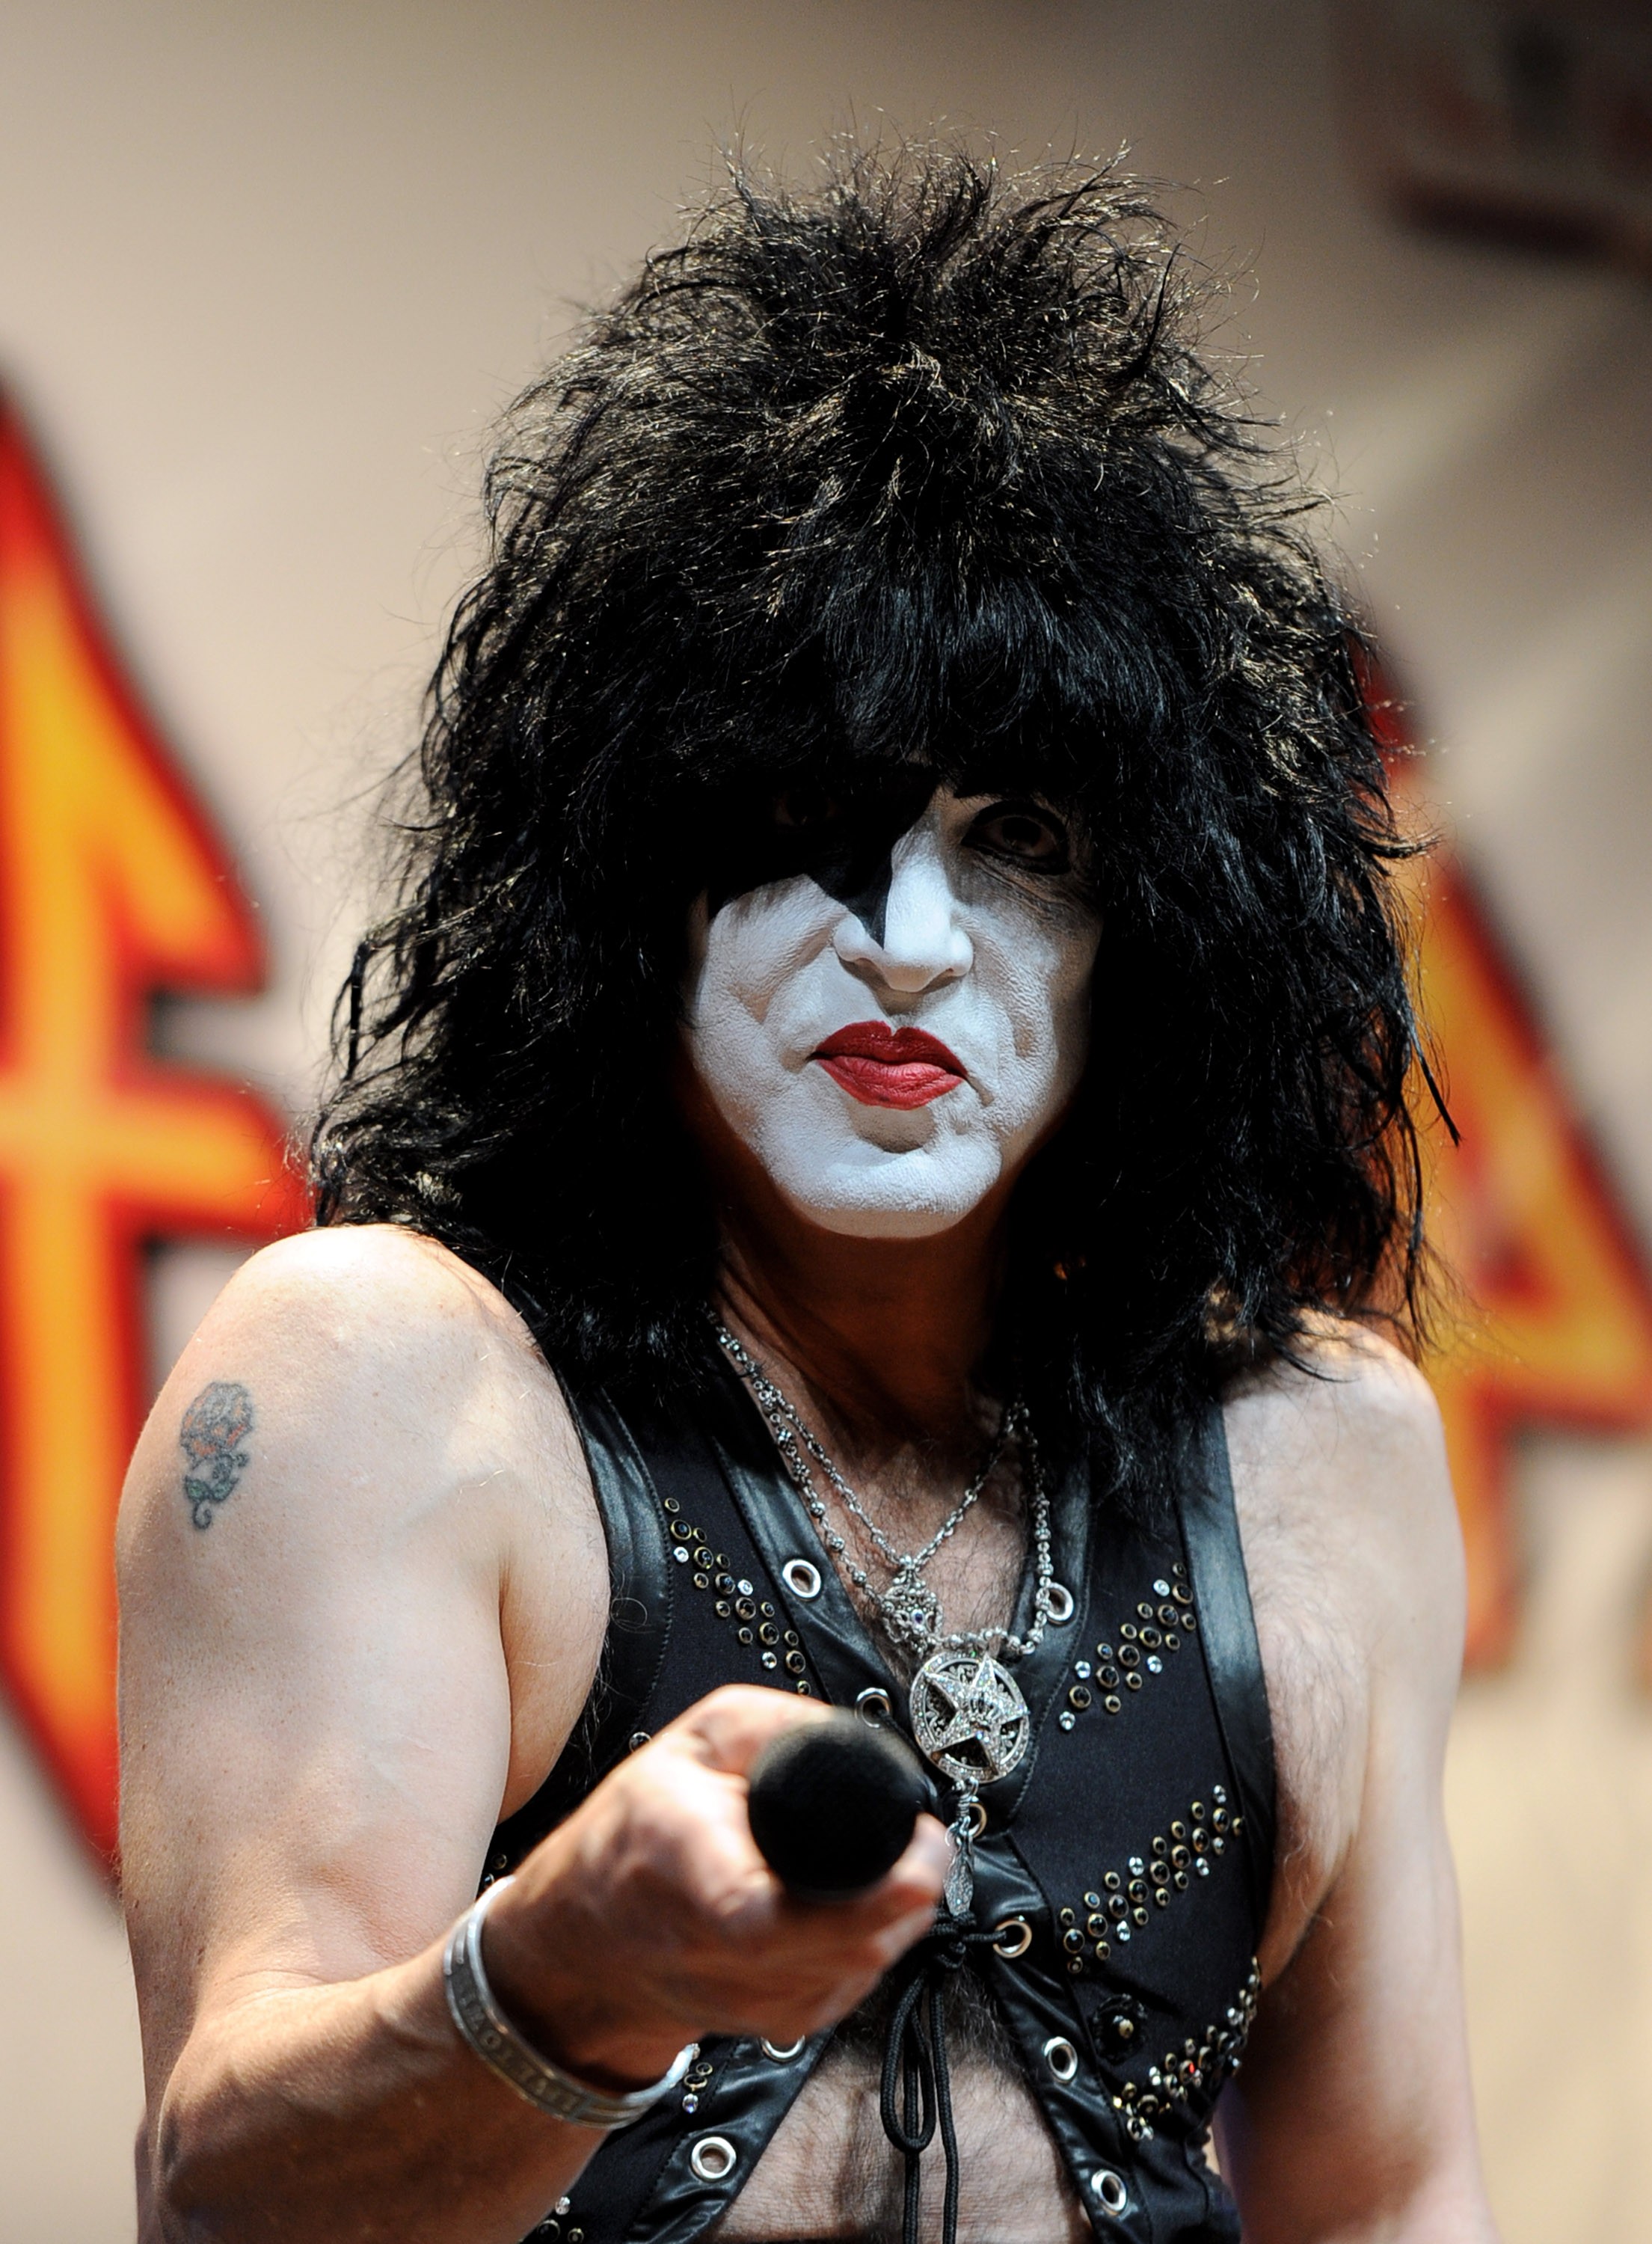 Paul Stanley afirma que ex-membros do Kiss eram anti-semitas (Foto: Getty Images)